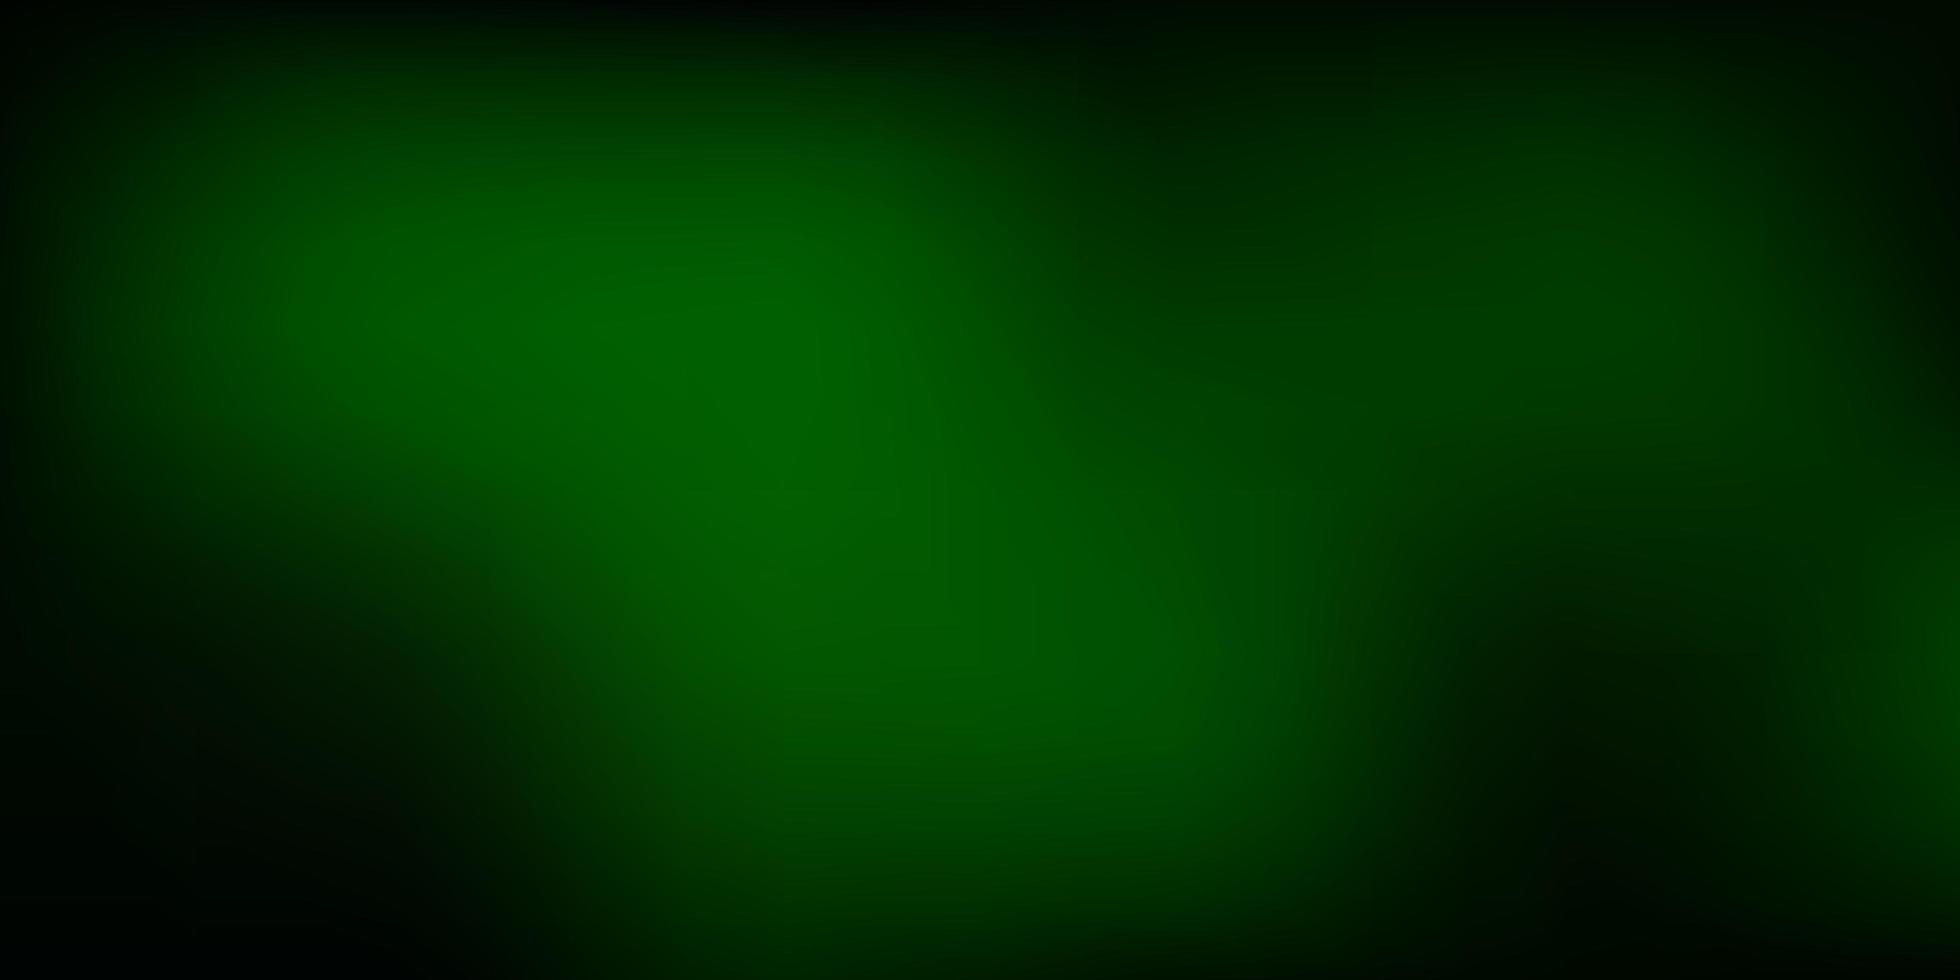 Dark Green vector abstract blur background